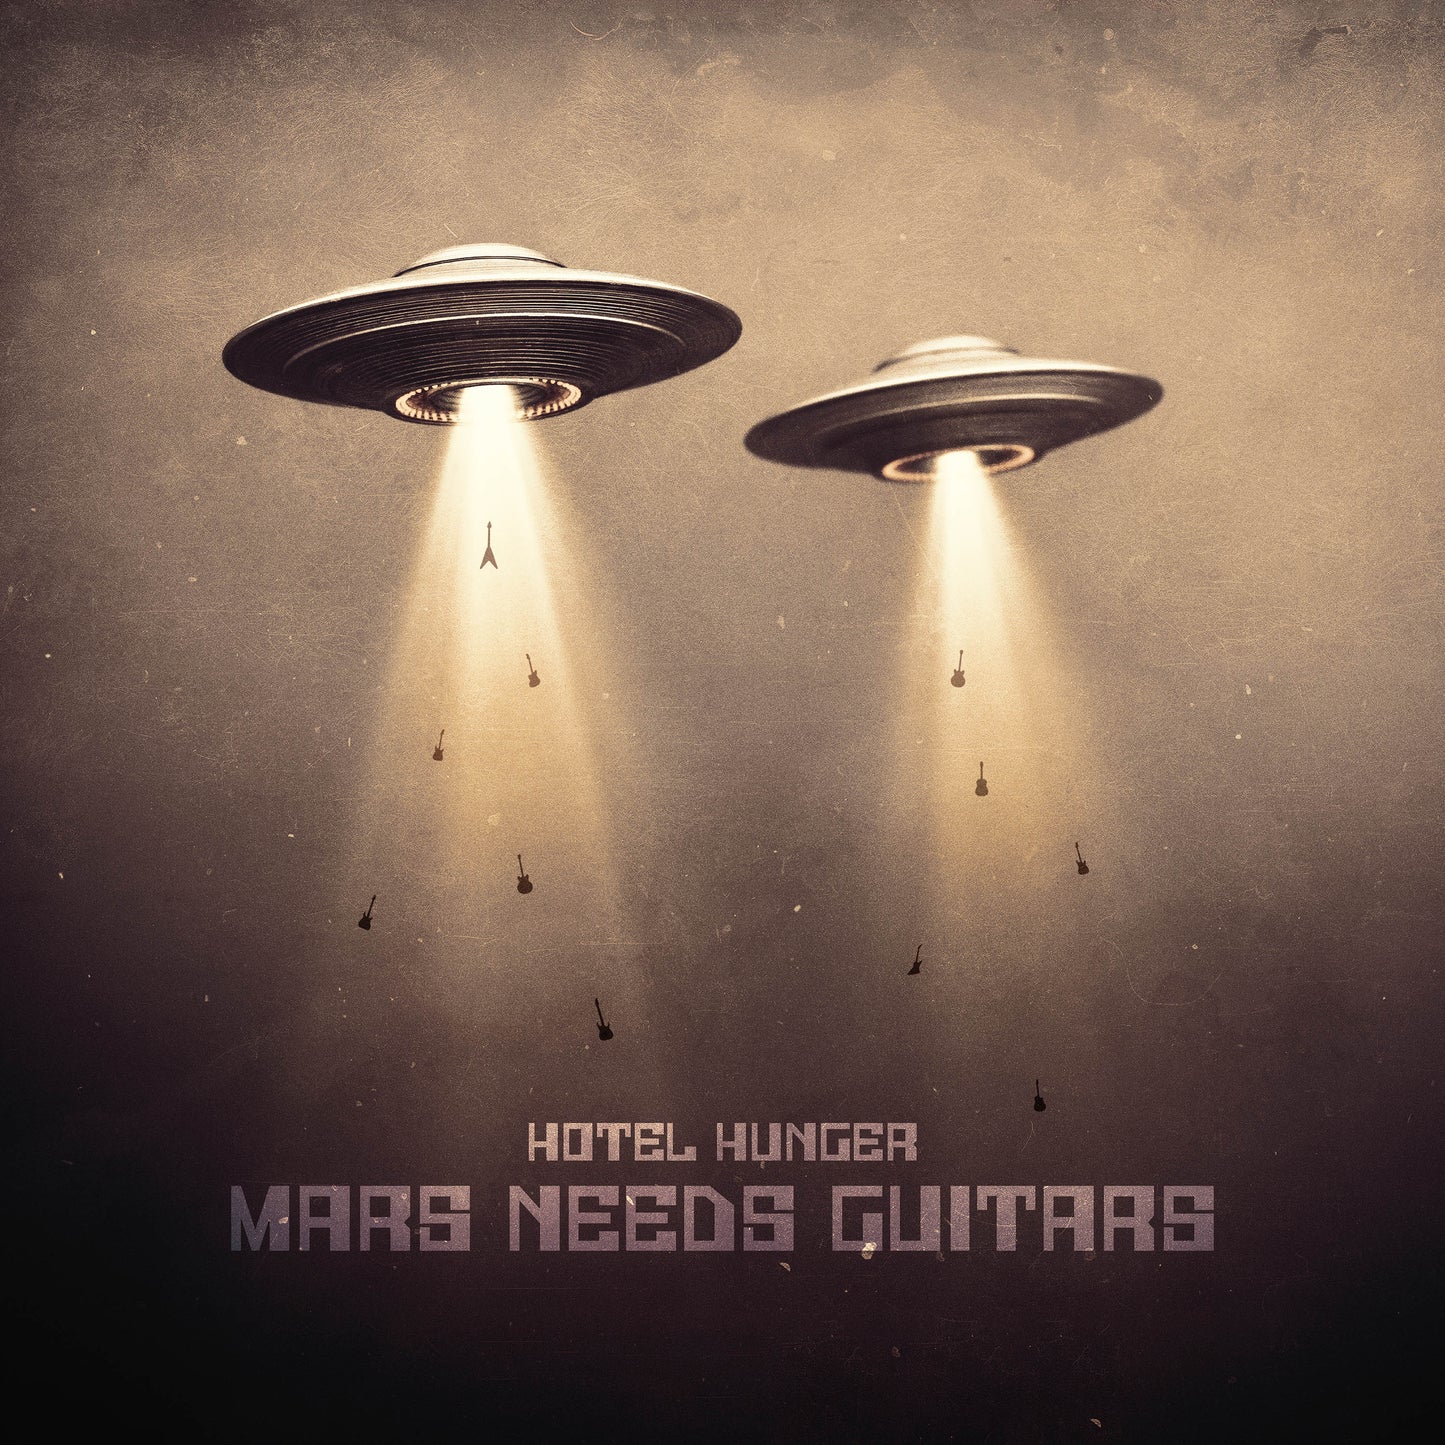 Mars Needs Guitars